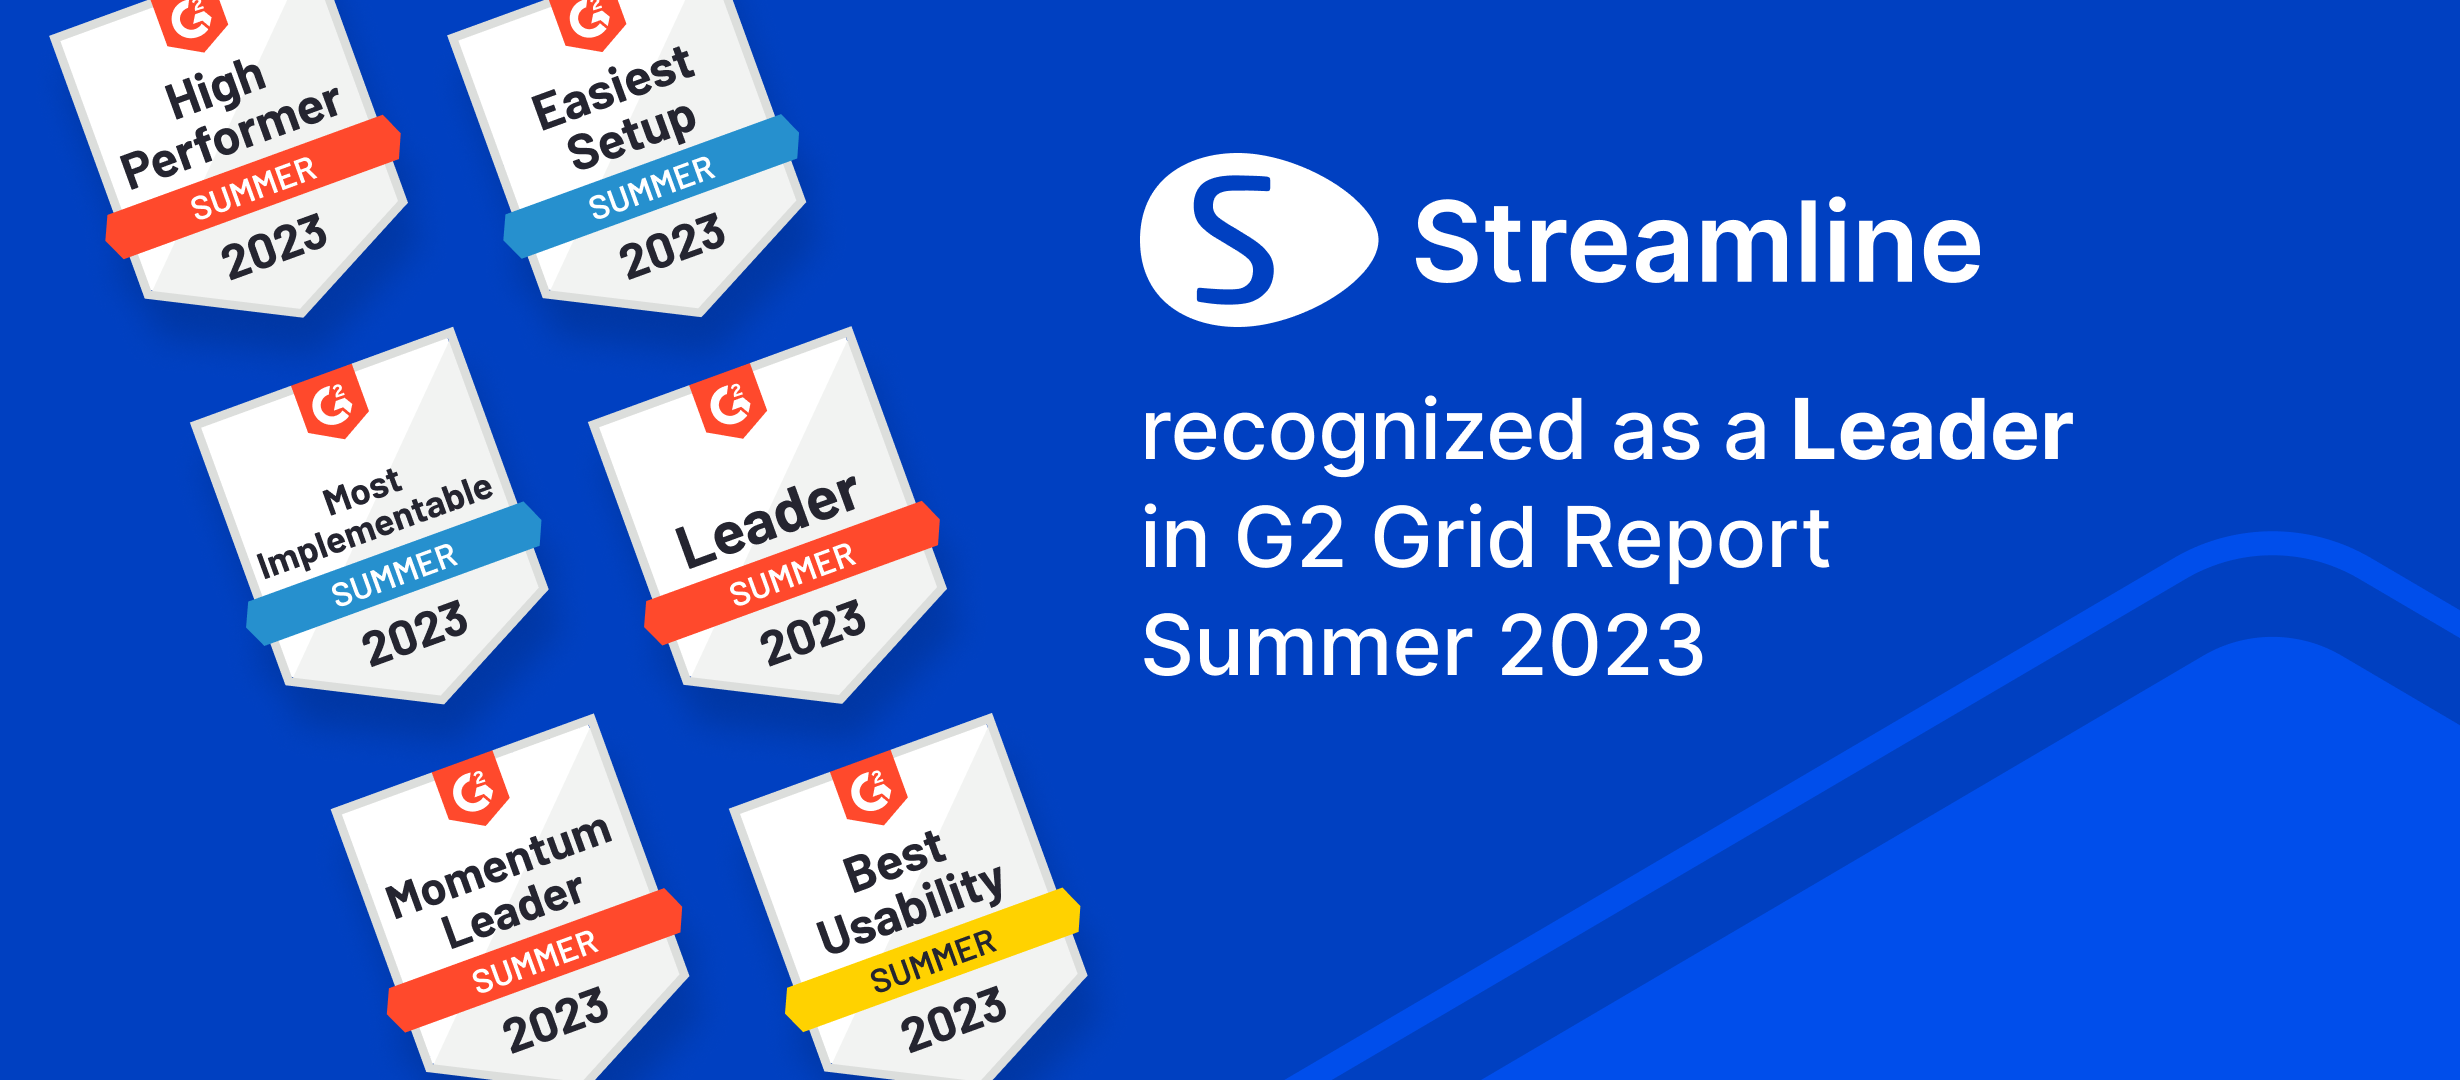 GMDH Streamline حصل على لقب رائد عبر فئات متعددة في تقارير G2 Summer'23 | GMDH